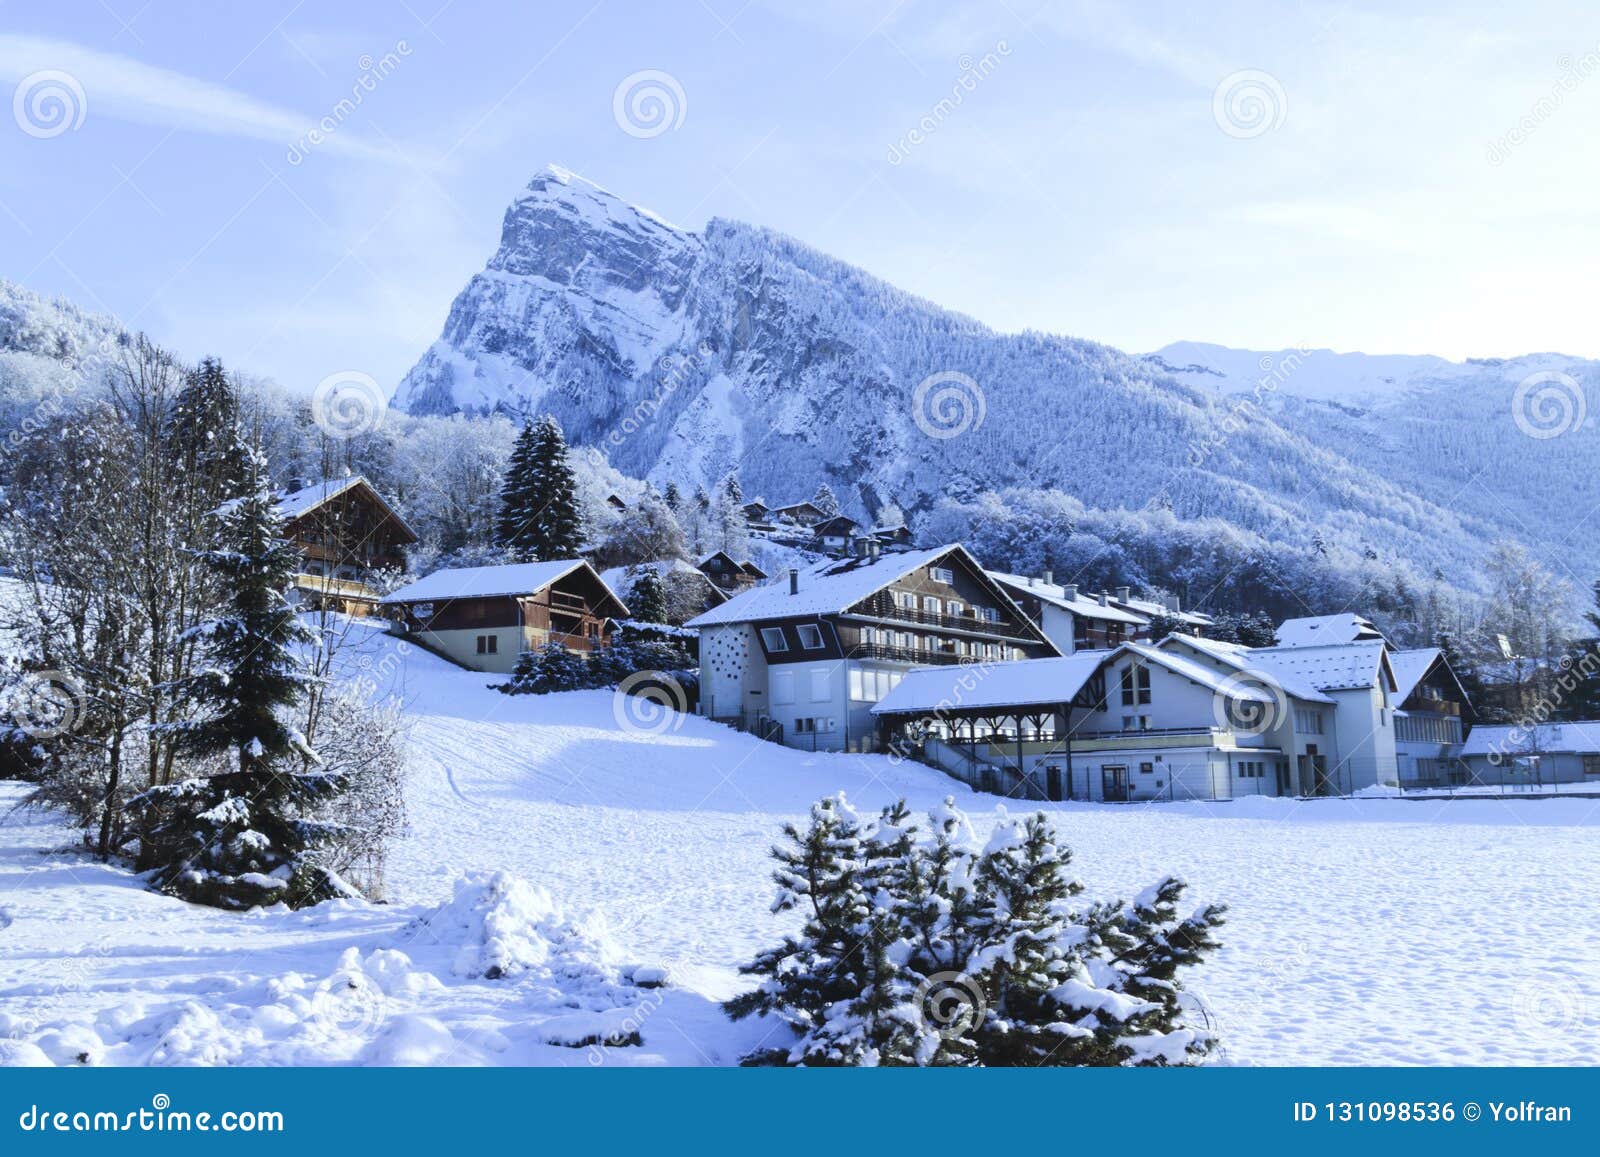 Snowy Ridge Ski Resort